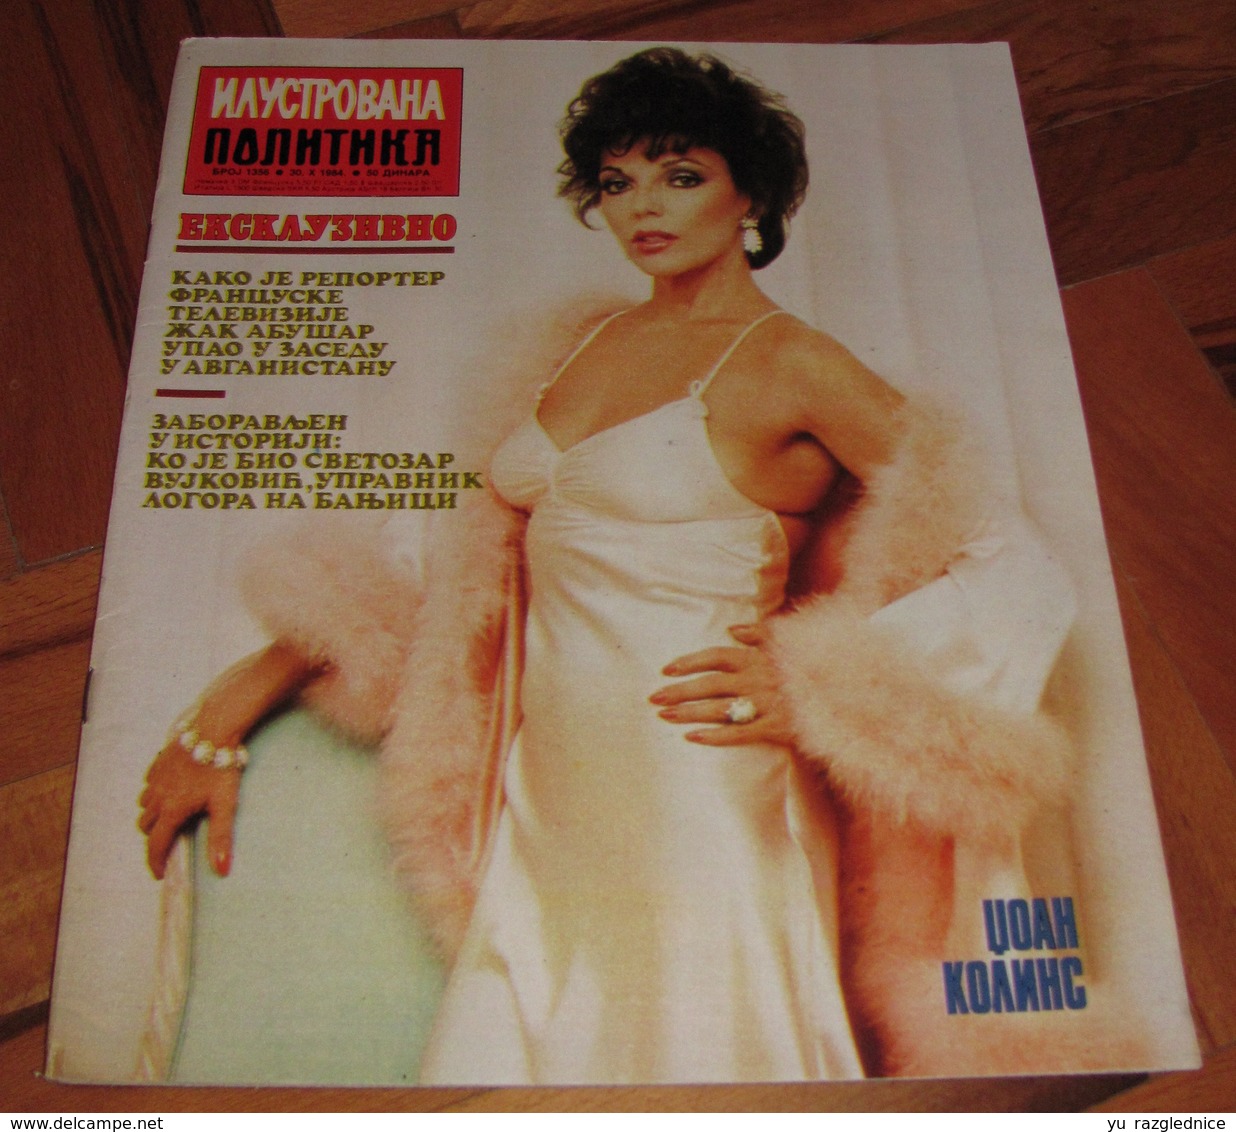 Joan Collins - ILUSTROVANA POLITIKA Yugoslavian October 1984 VERY RARE - Magazines